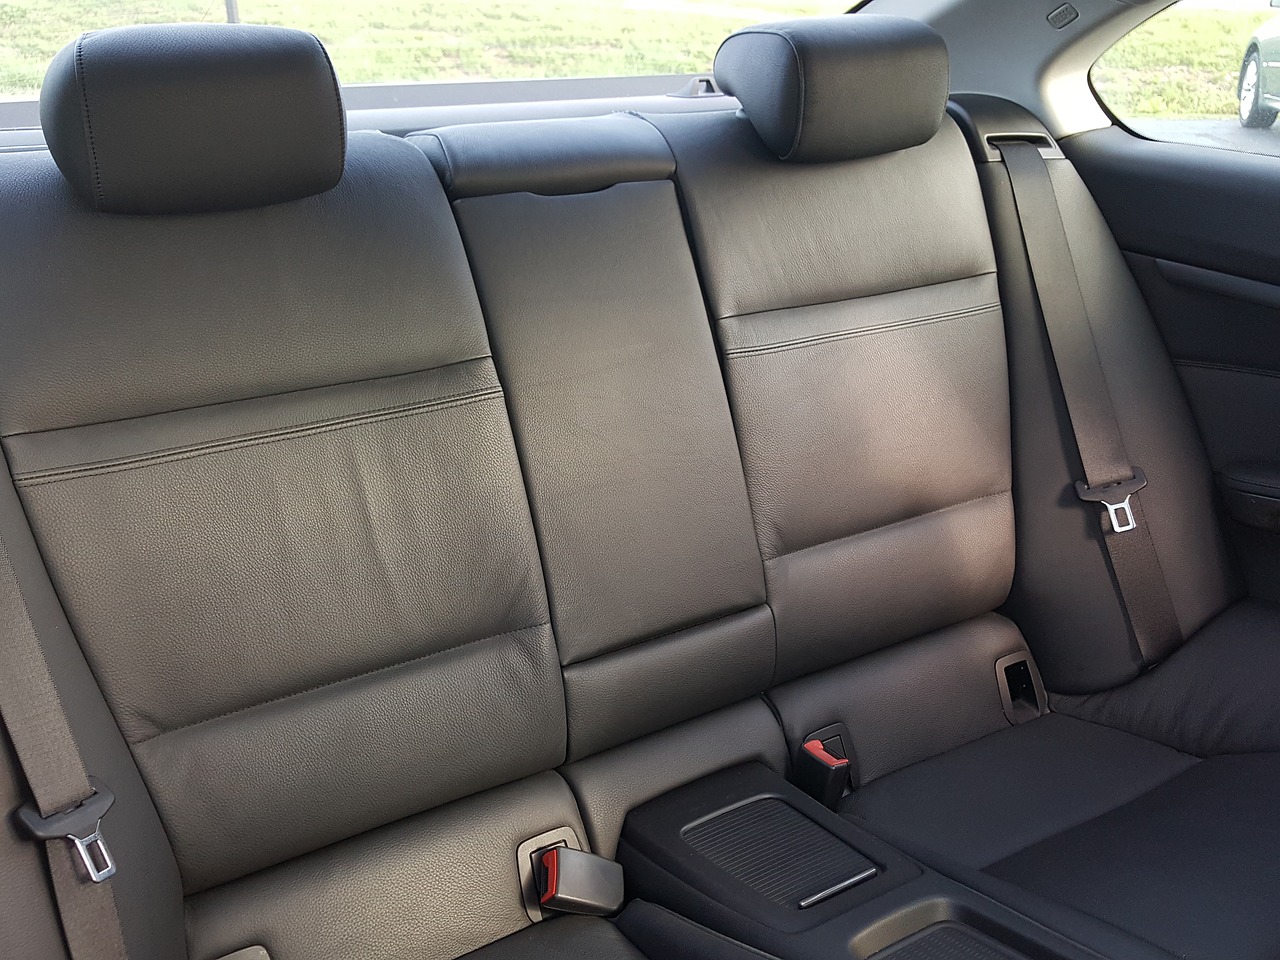 Plastic car seats and seat belts